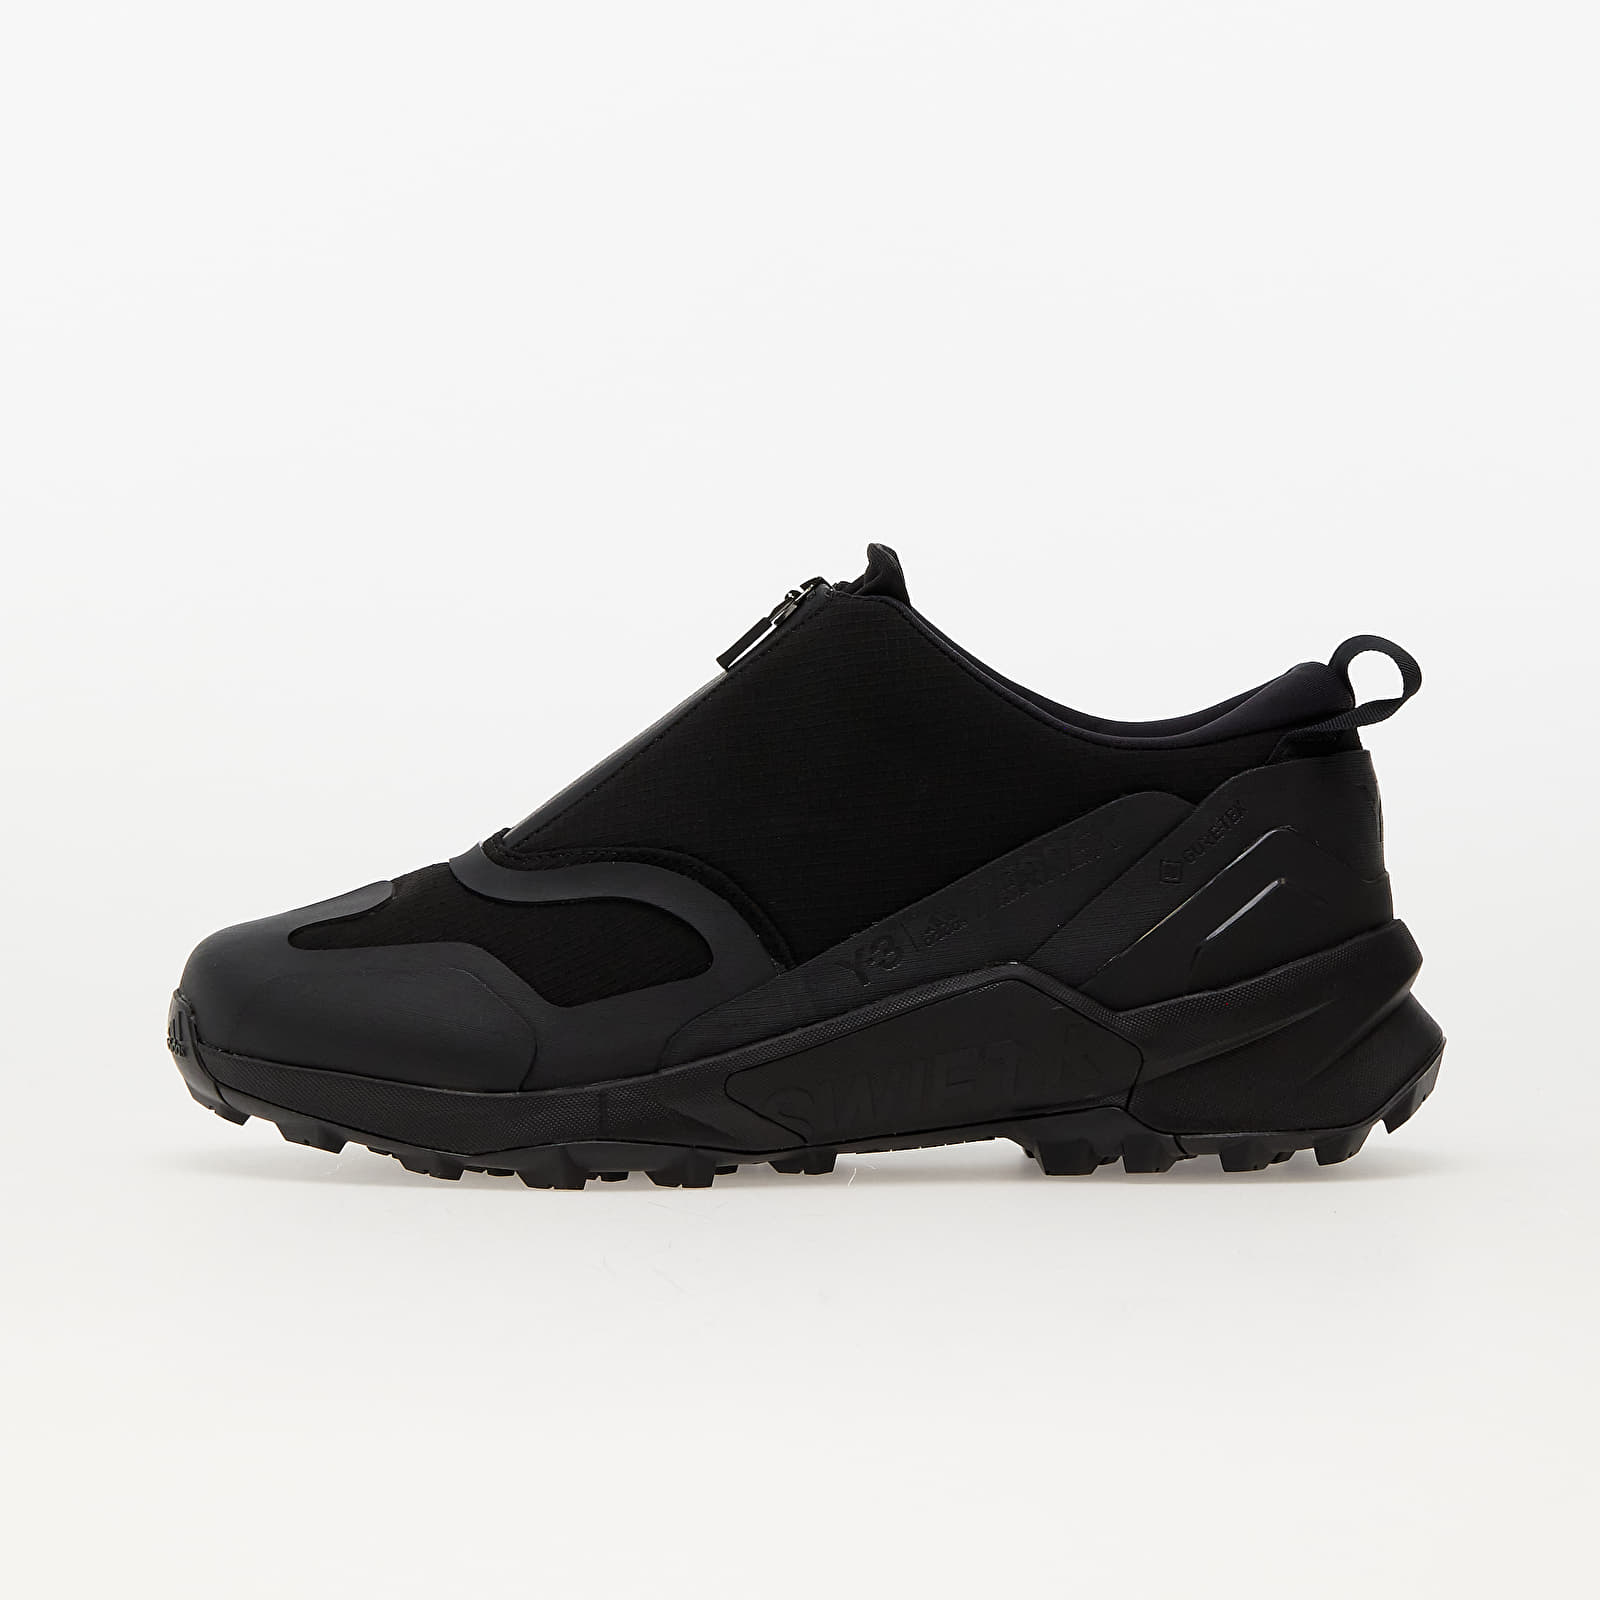 Men's shoes Y-3 Terrex Swift R3 Black/ Black/ Black